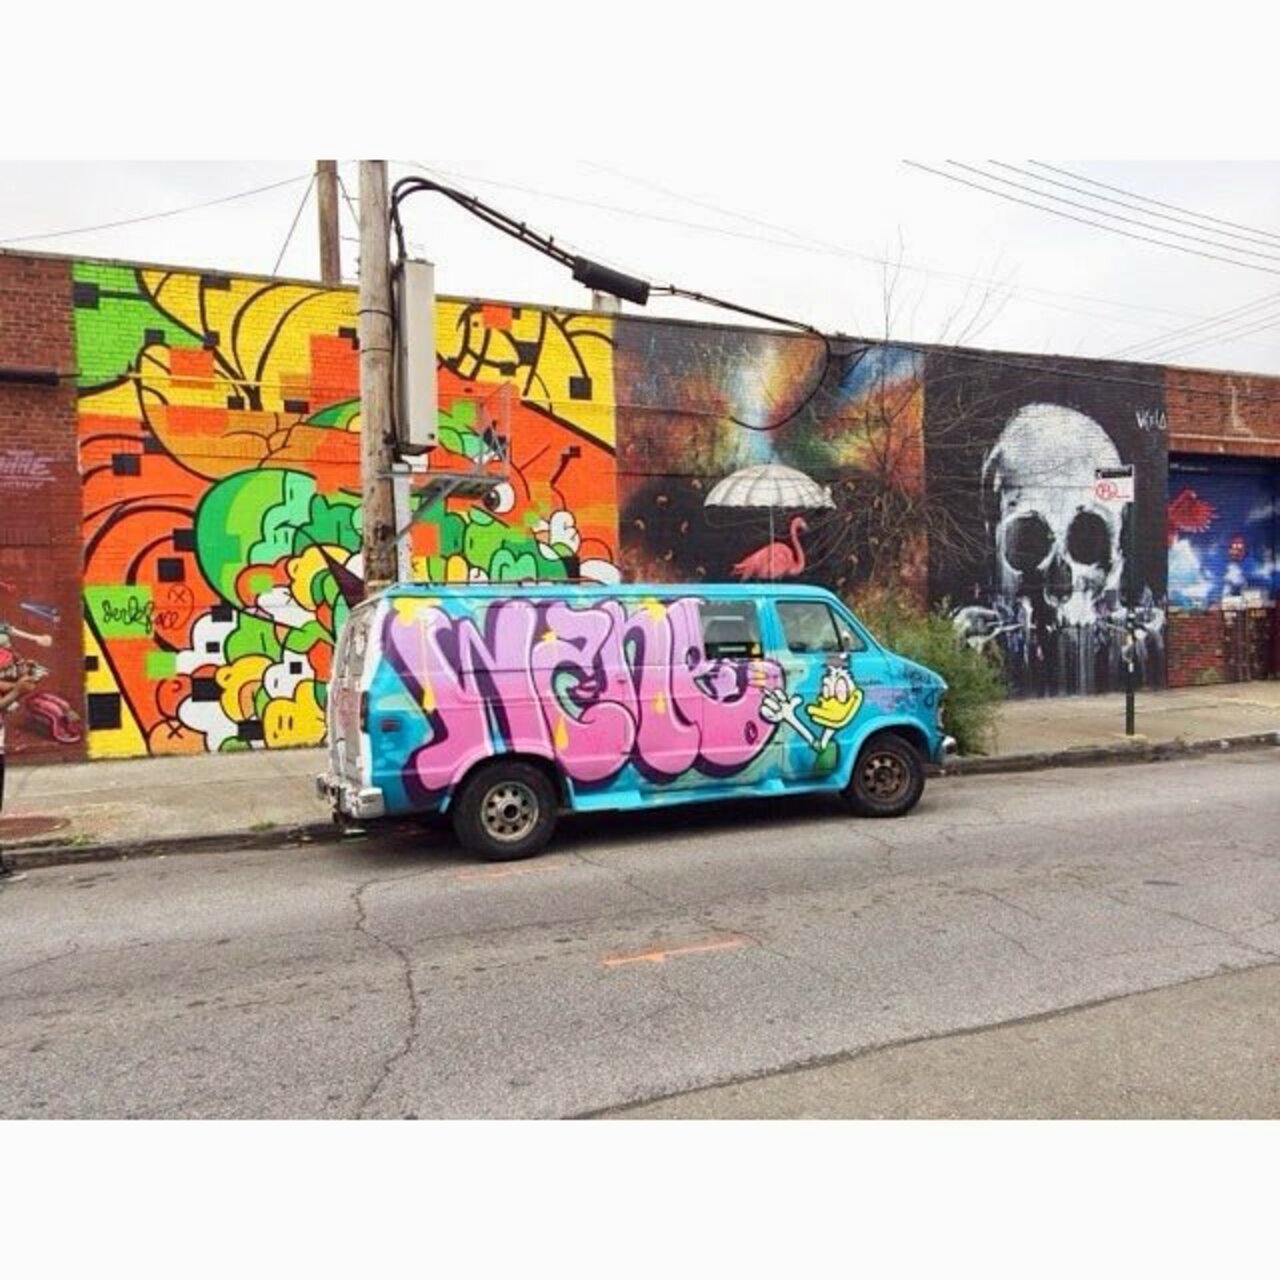 I saw this van in #brooklyn . Does anyone know of the #artist ? #streetart #graffiti https://t.co/0dG2rrupcc